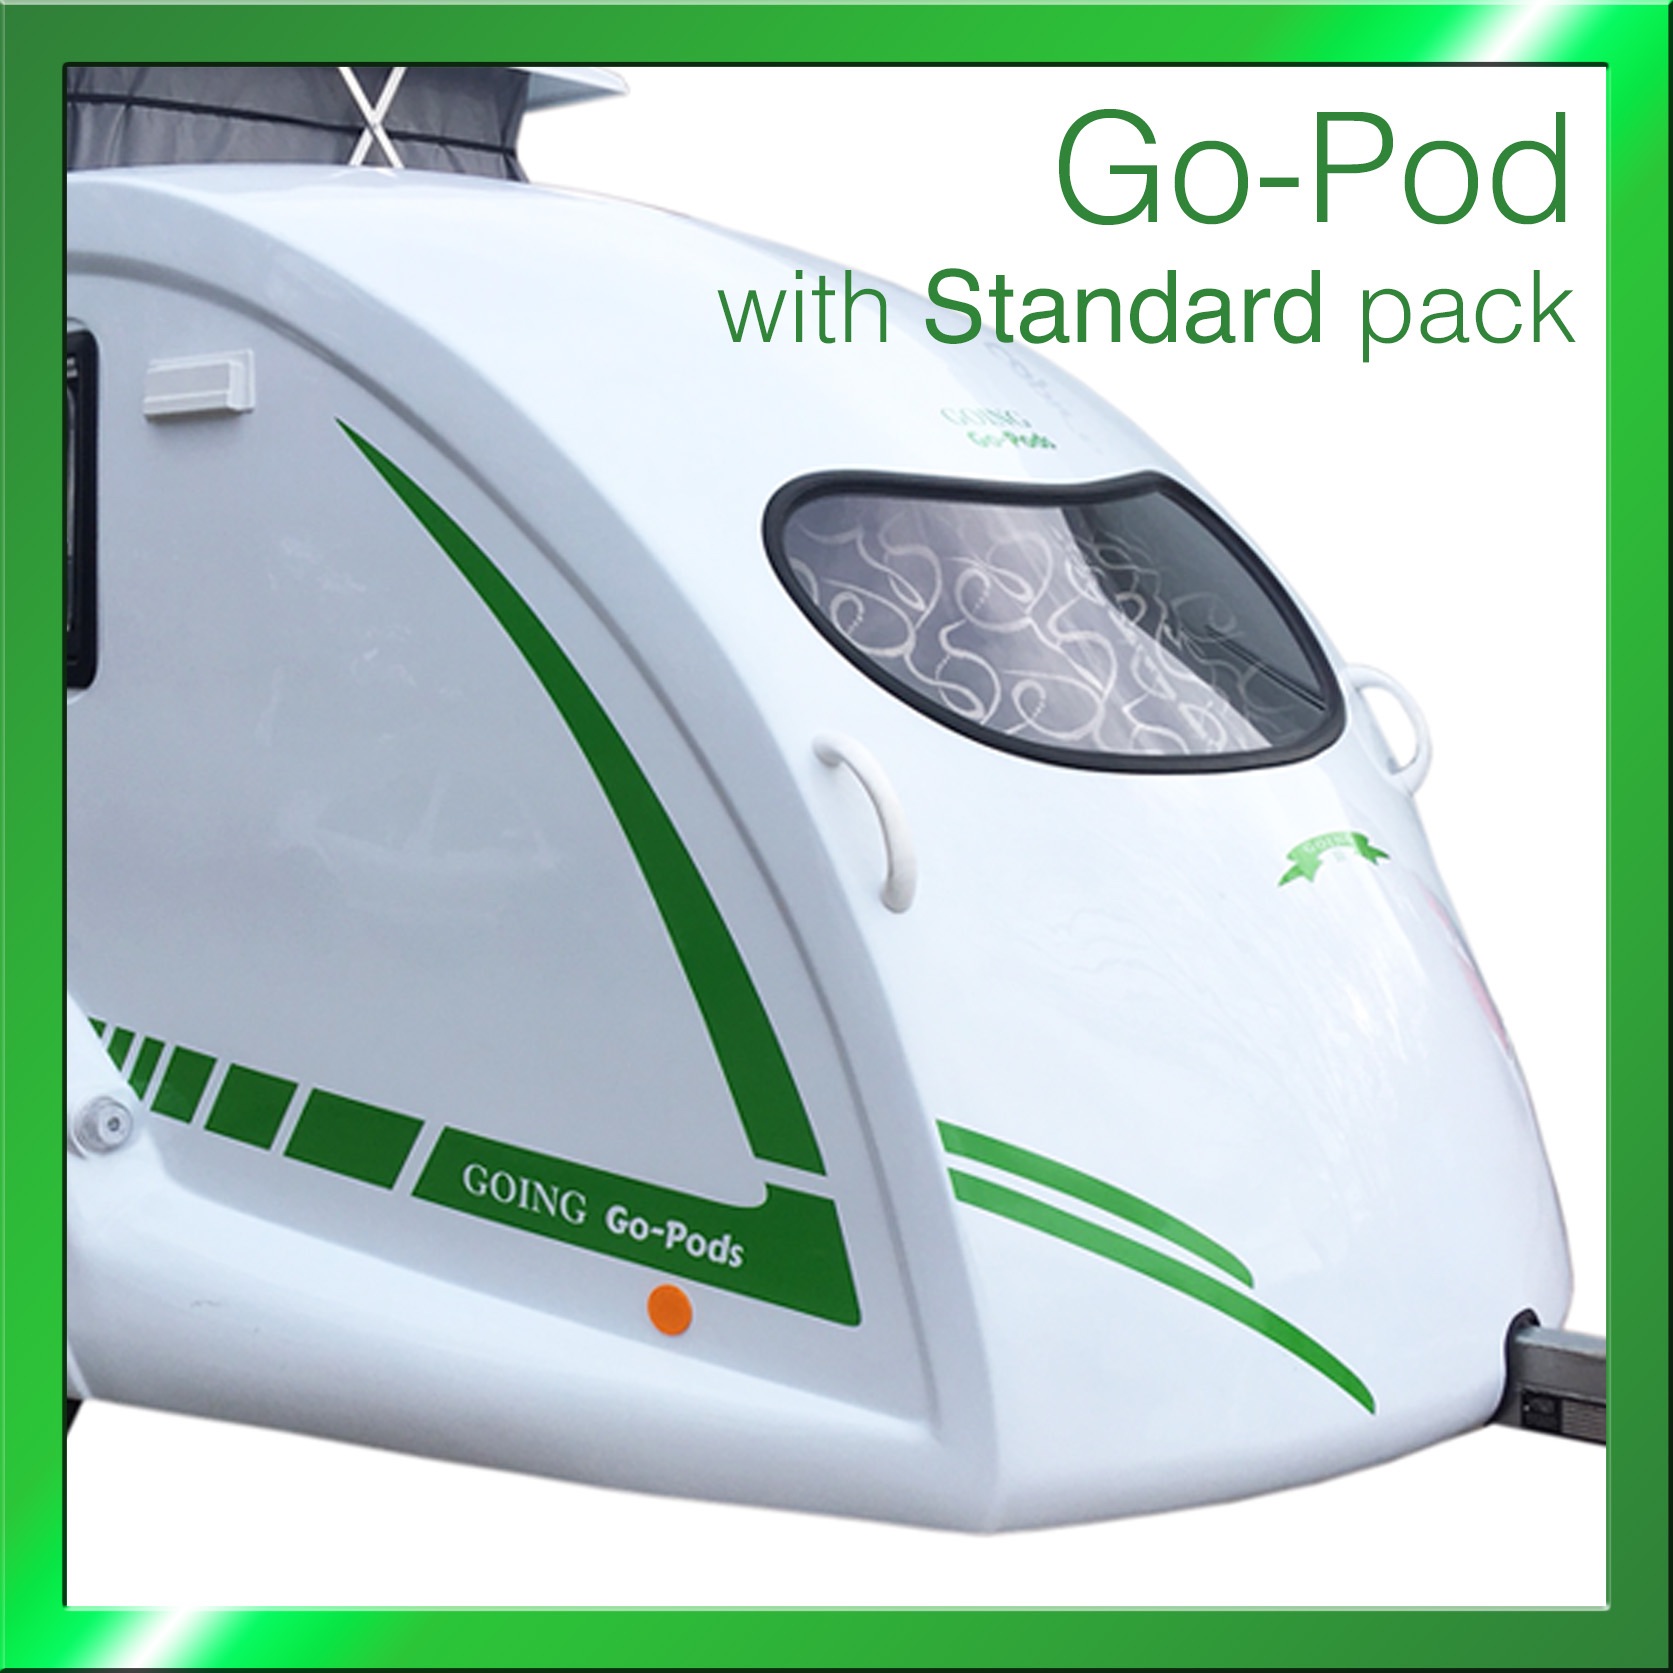 Standard Go-Pod